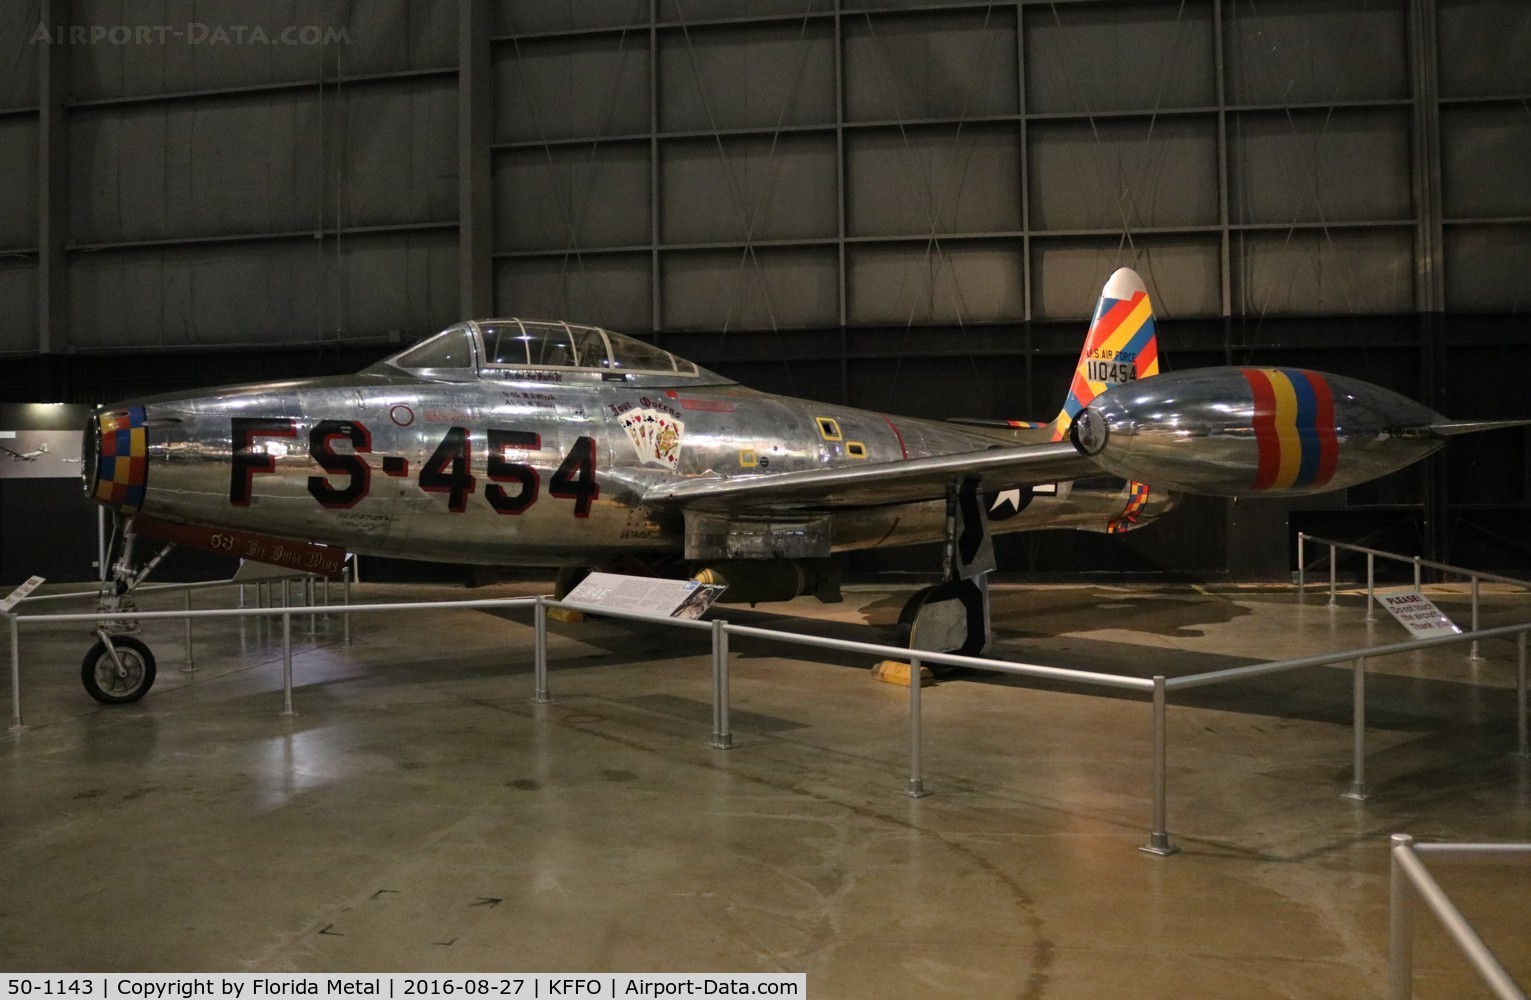 50-1143, 1950 Republic F-84E-20-RE Thunderjet C/N Not found 50-1143, F-84E zx